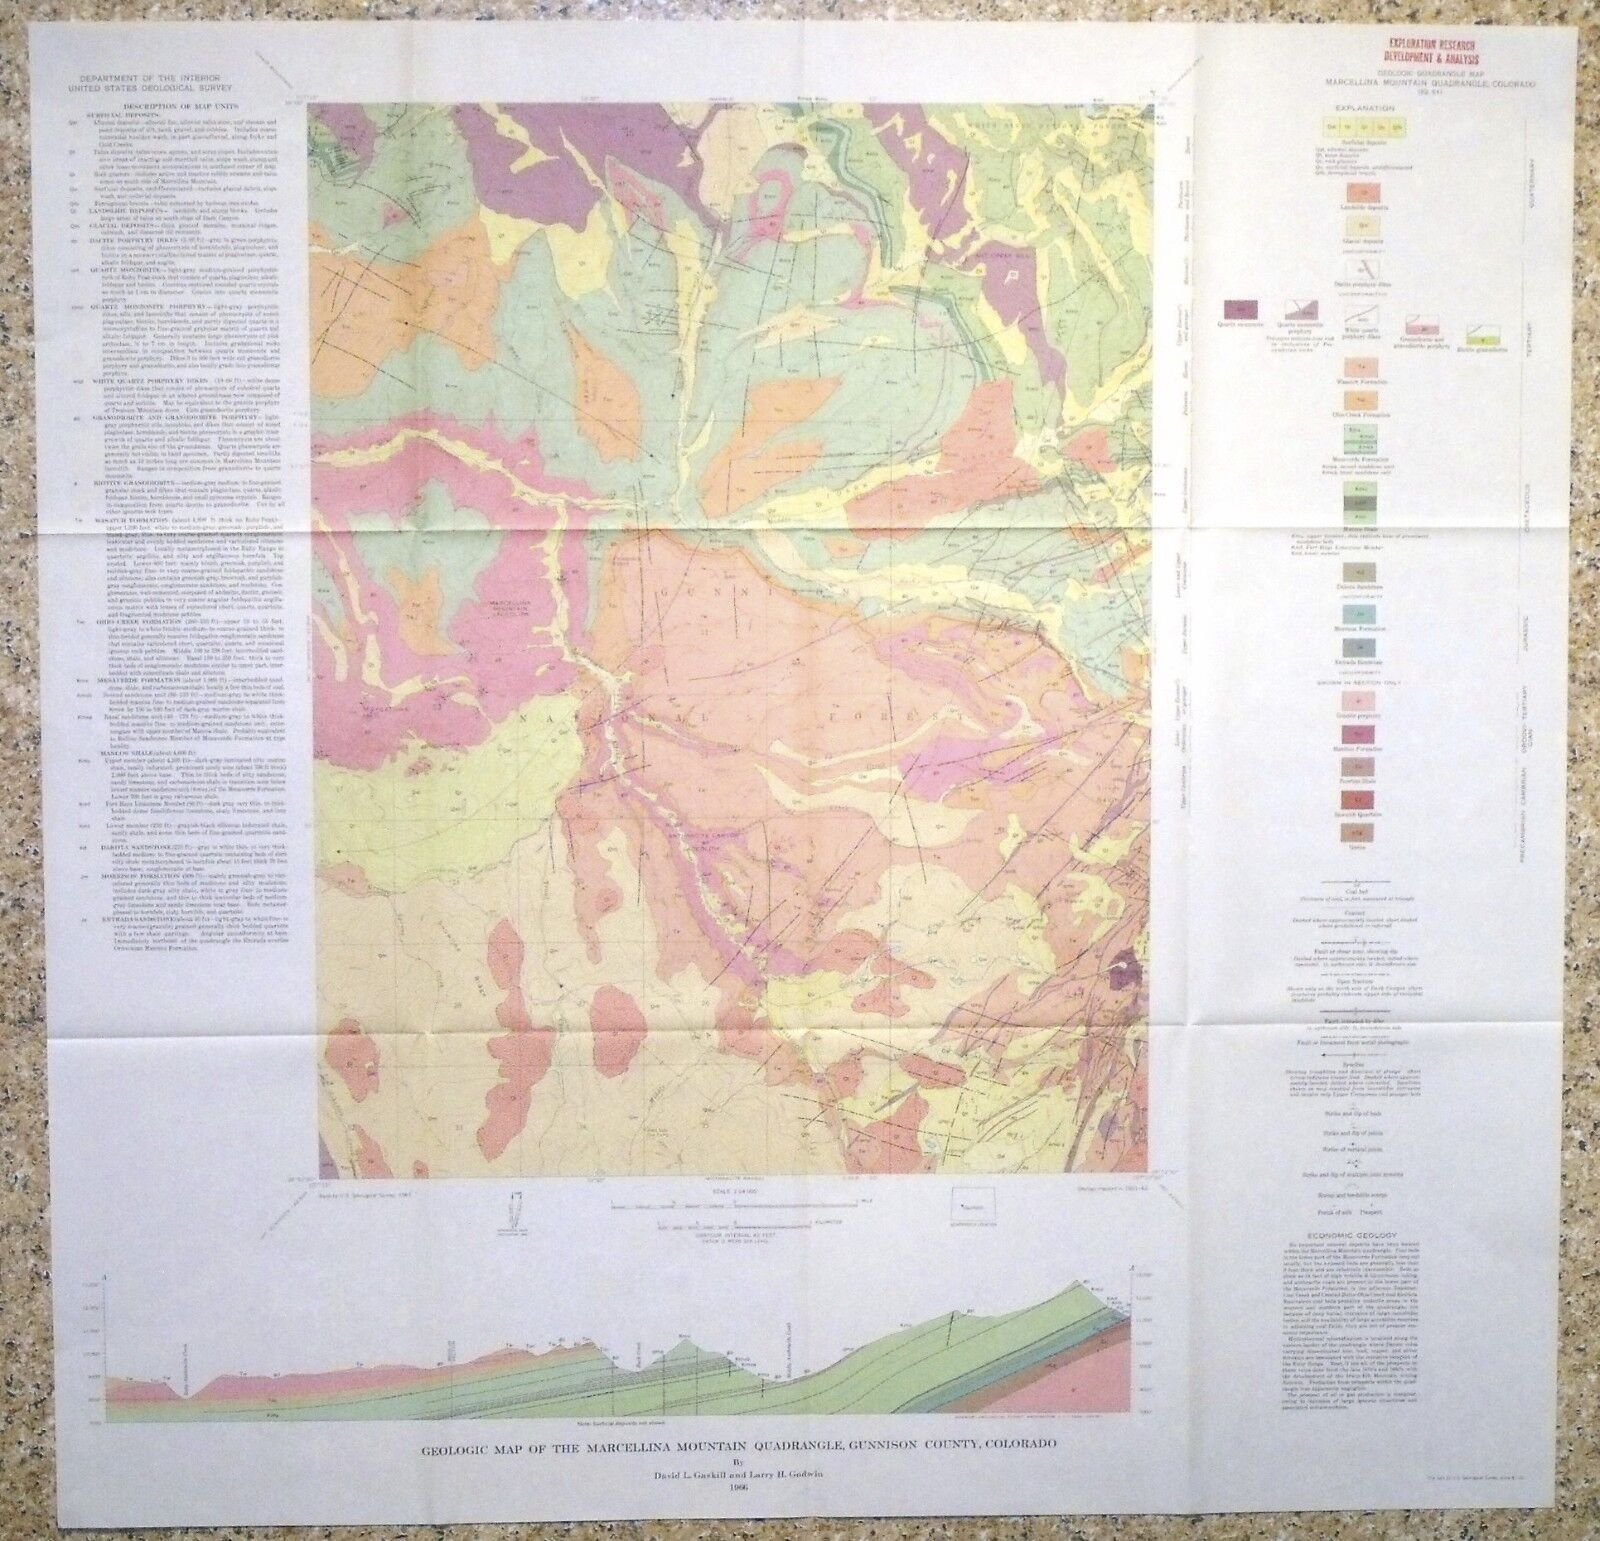 USGS MARCELLINA MOUNTAIN COLORADO GEOLOGIC MAP, Full Color, Original Sleeve 1966